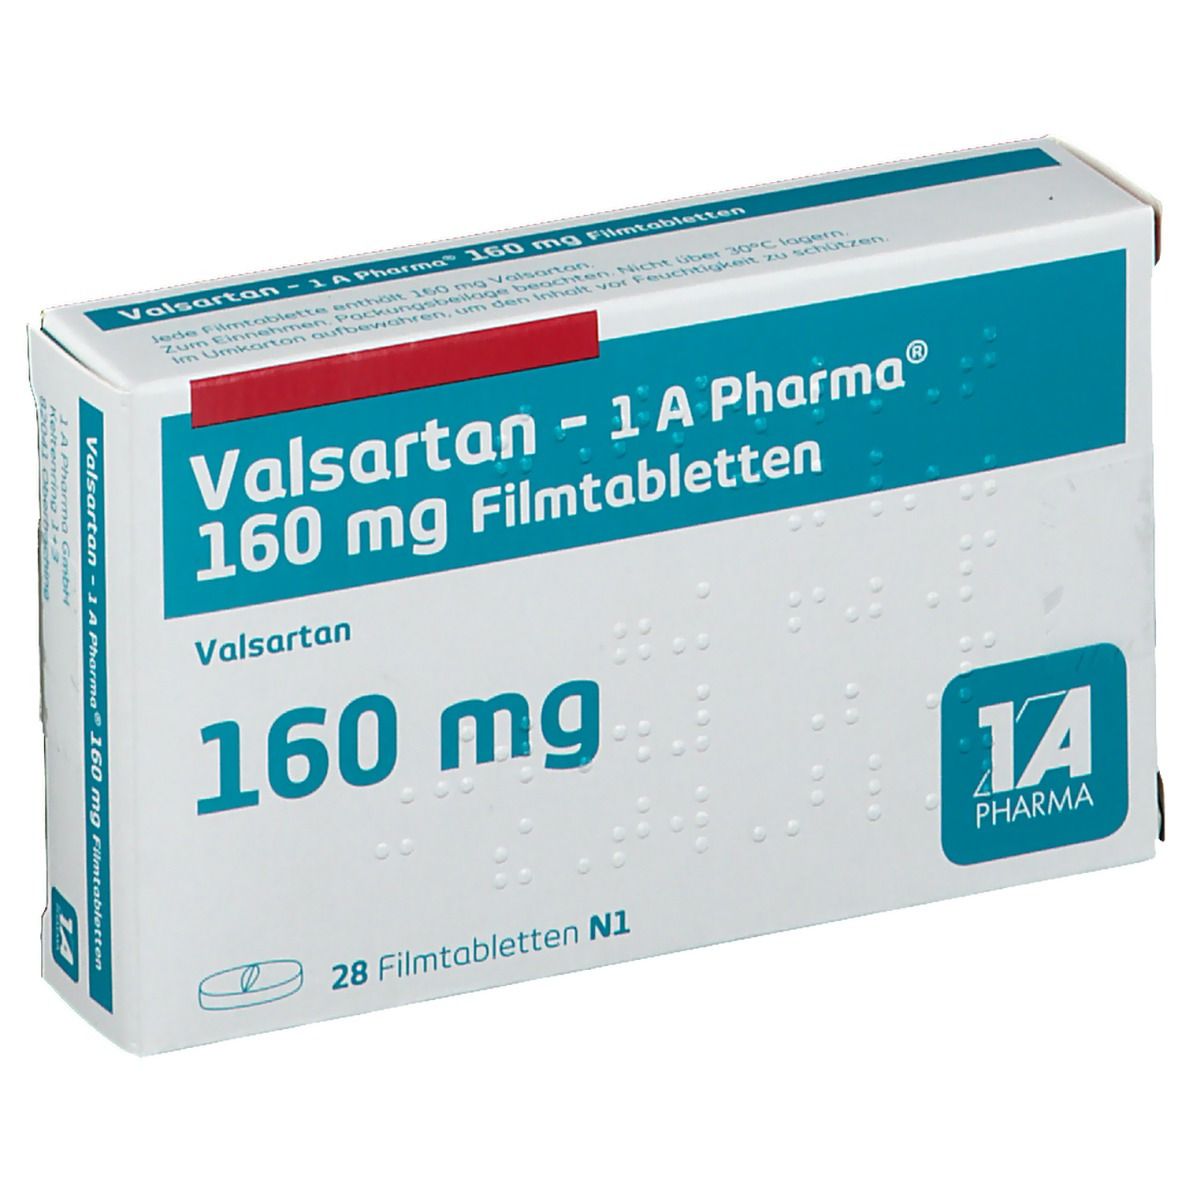 Valsartan - 1 A Pharma® 160 mg